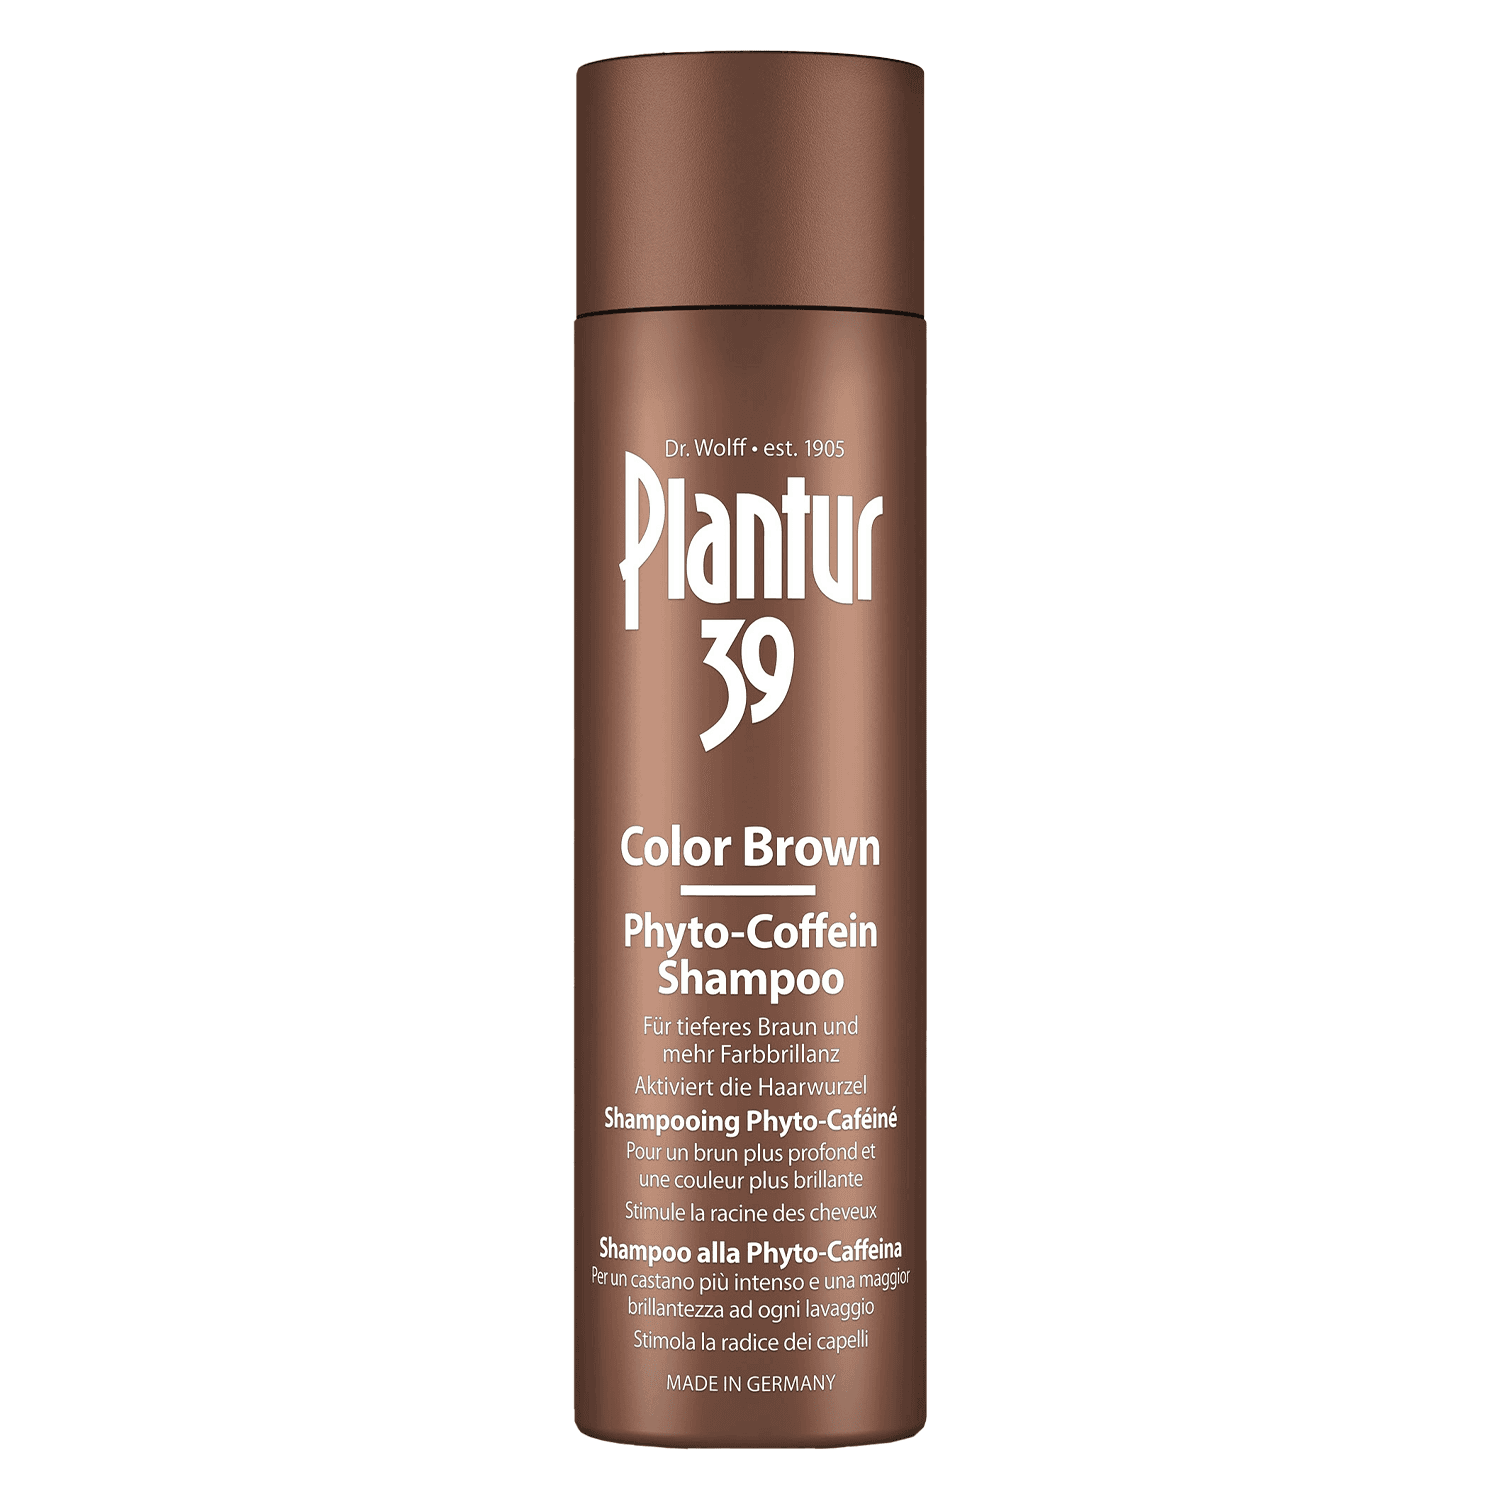 Plantur 39 - Color Braun Phyto-Coffein Shampoo